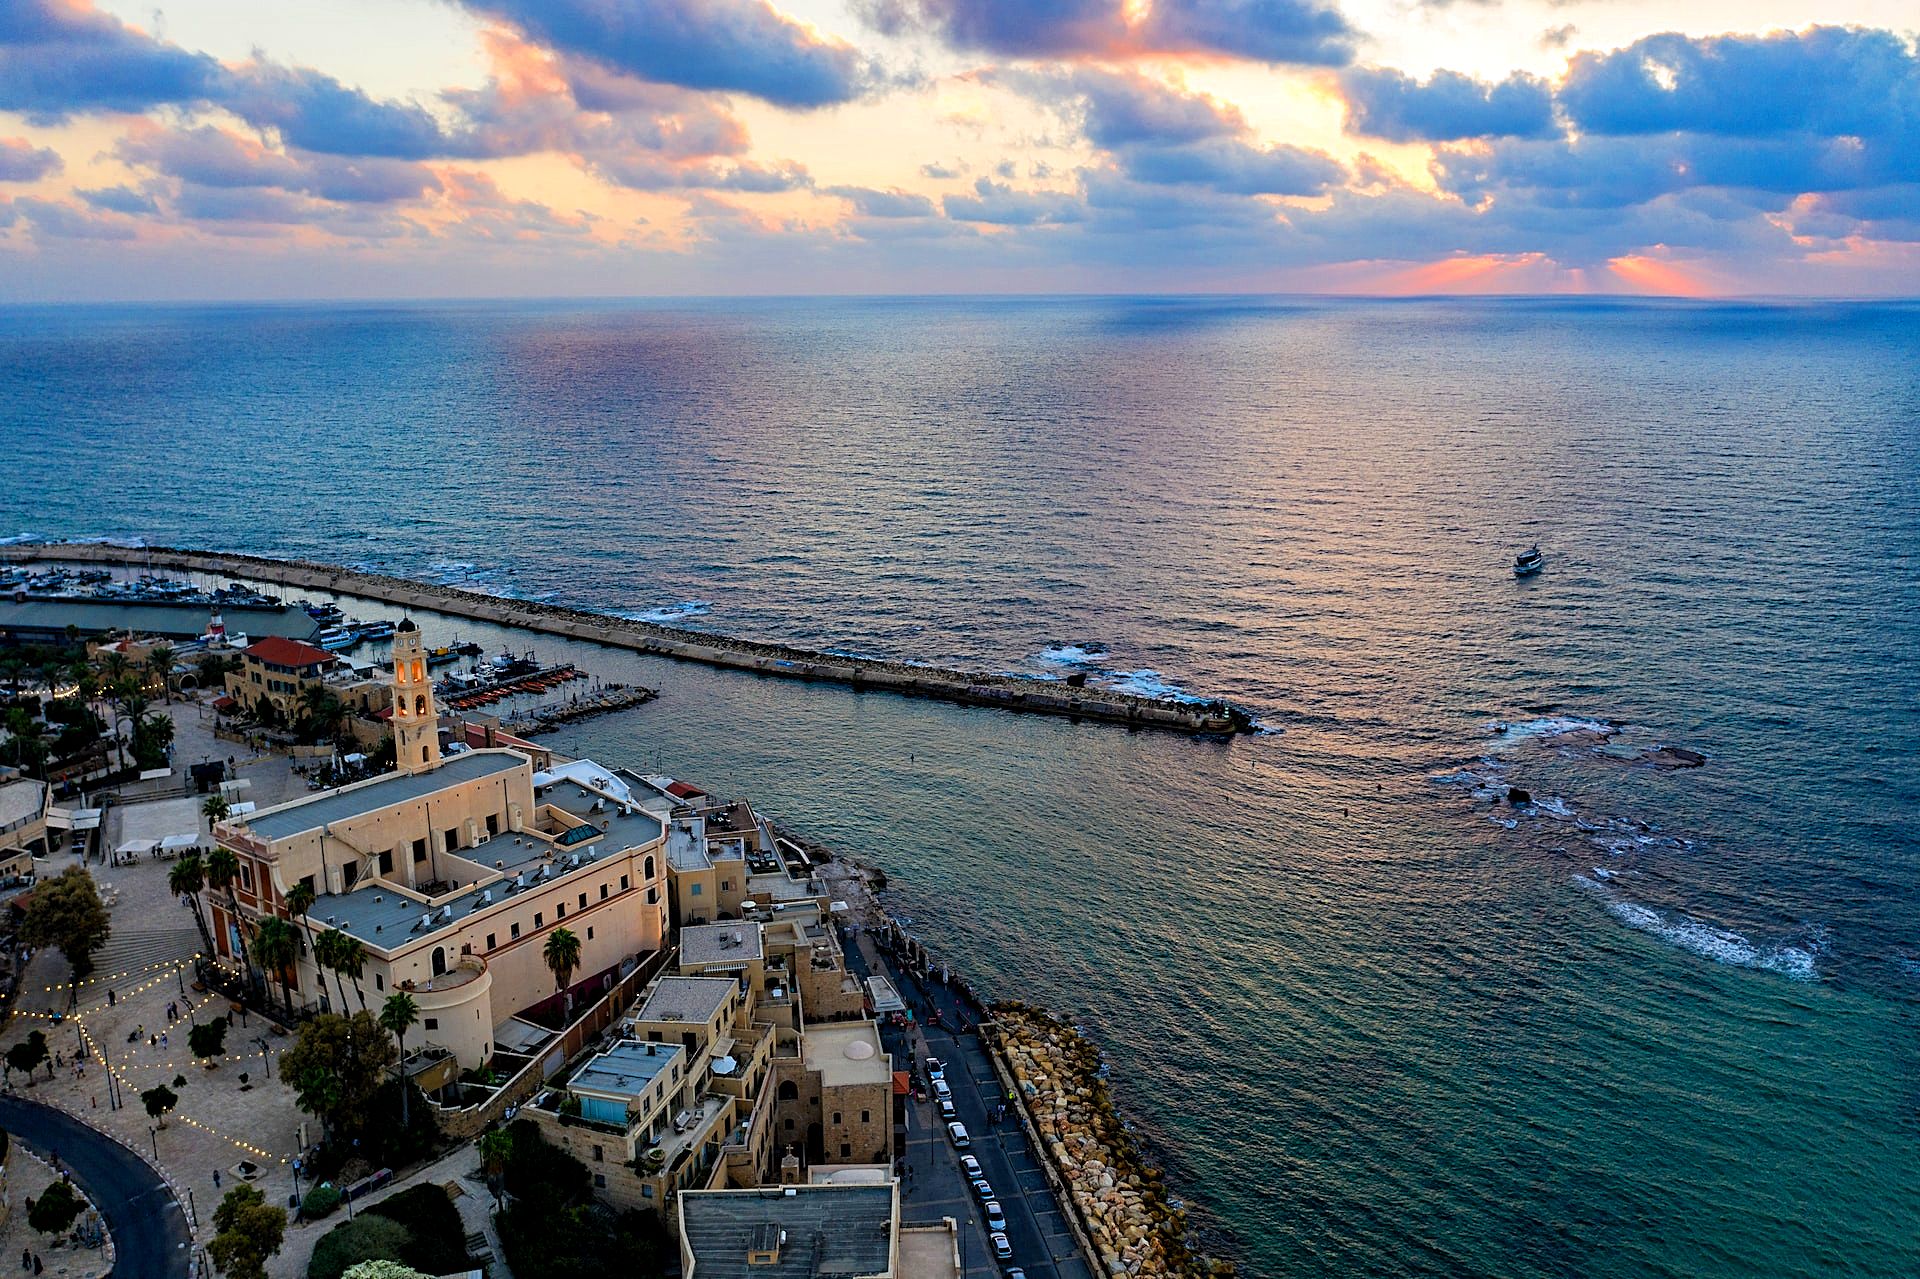 Sunset at the Jaffa Port, Israel